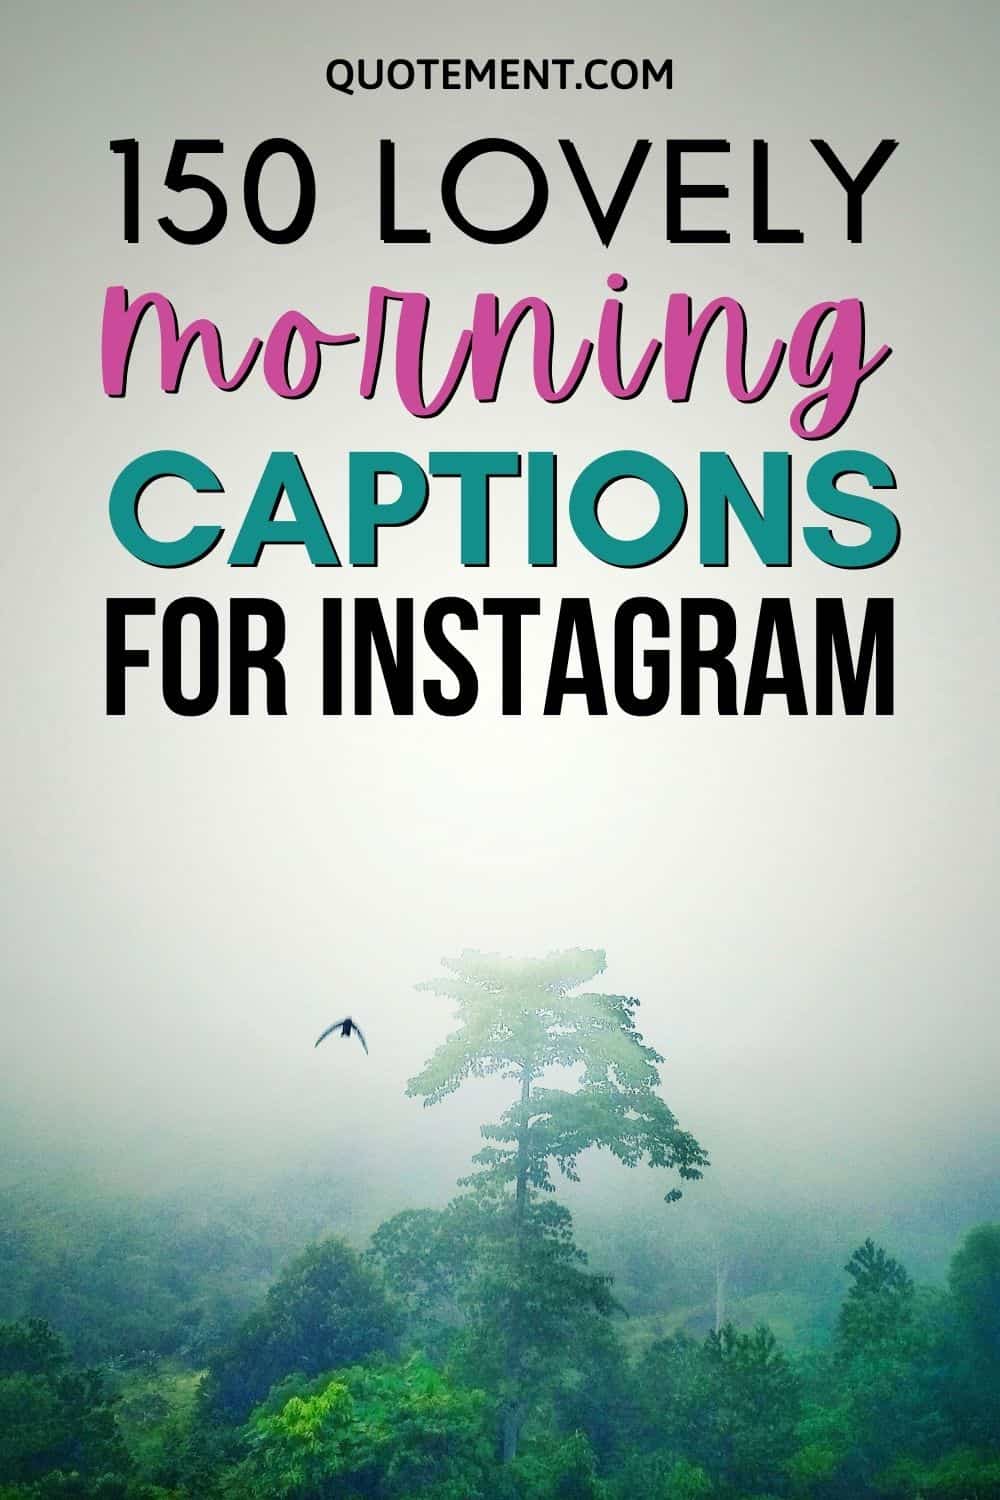 150 Inspirational Good Morning Captions For Instagram